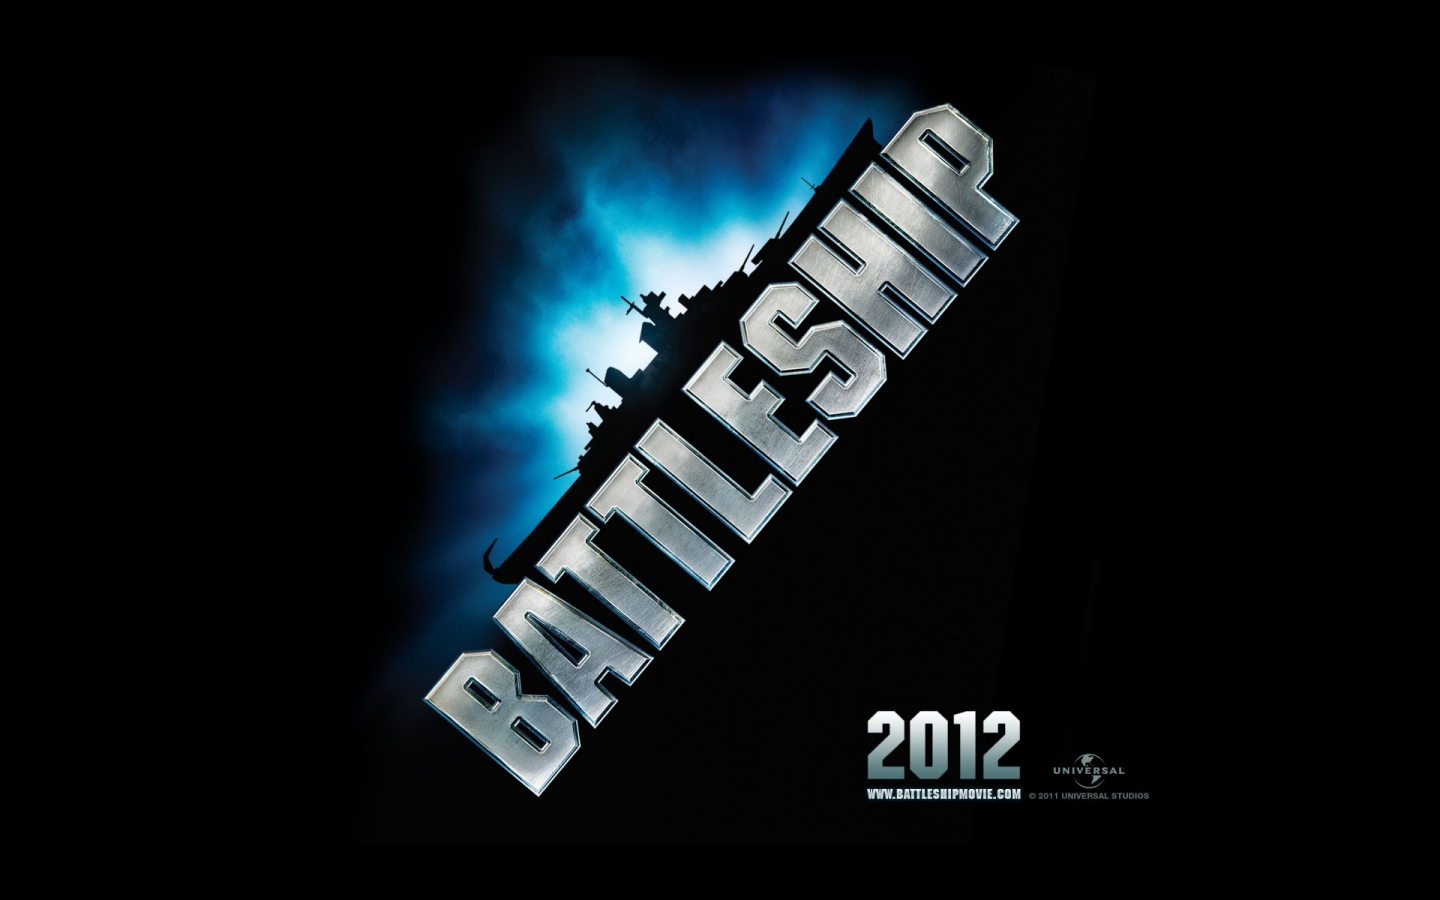 Battleship Movie for 1440 x 900 widescreen resolution